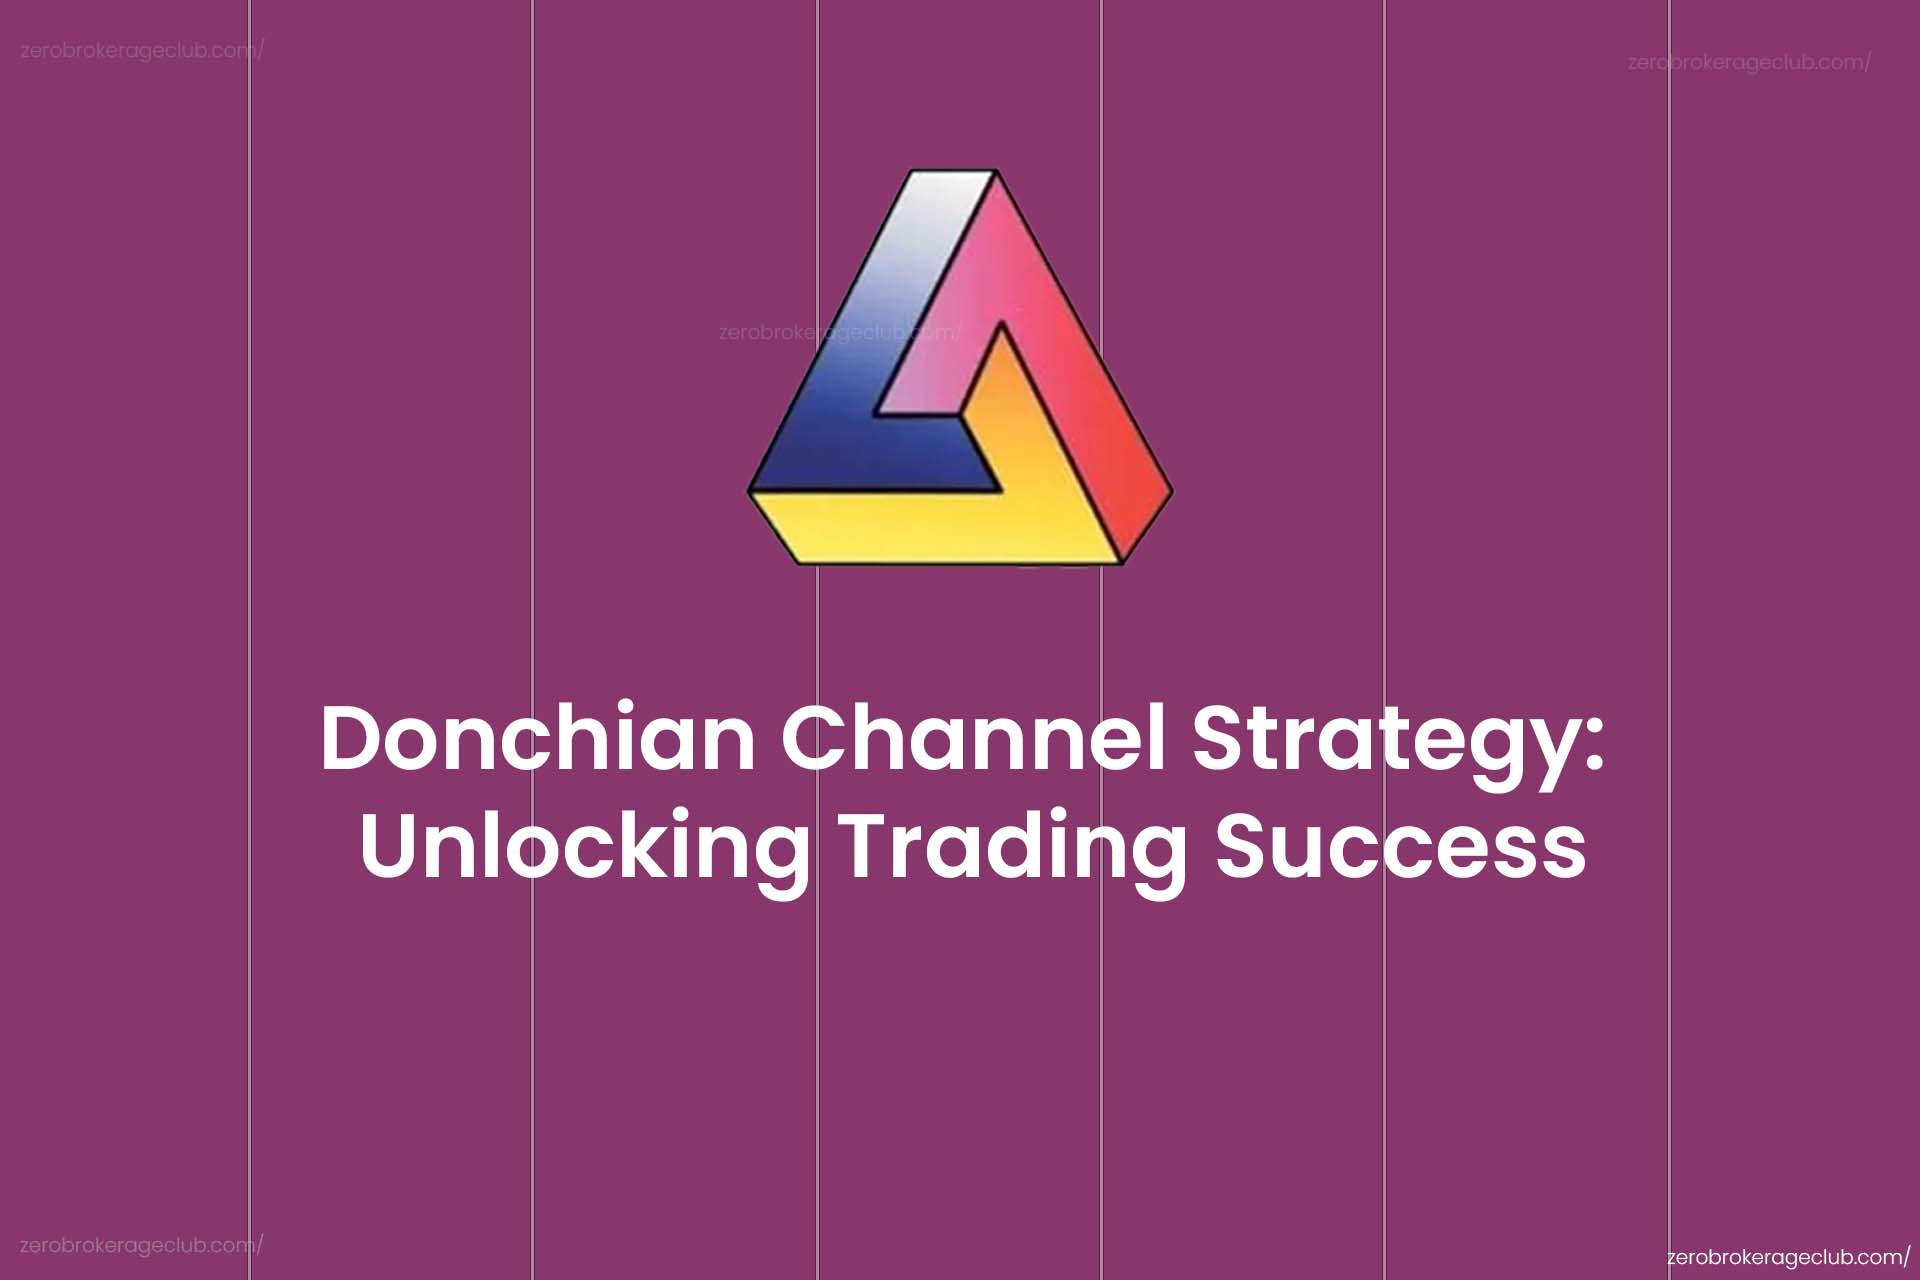 Donchian Channel Strategy: Unlocking Trading Success